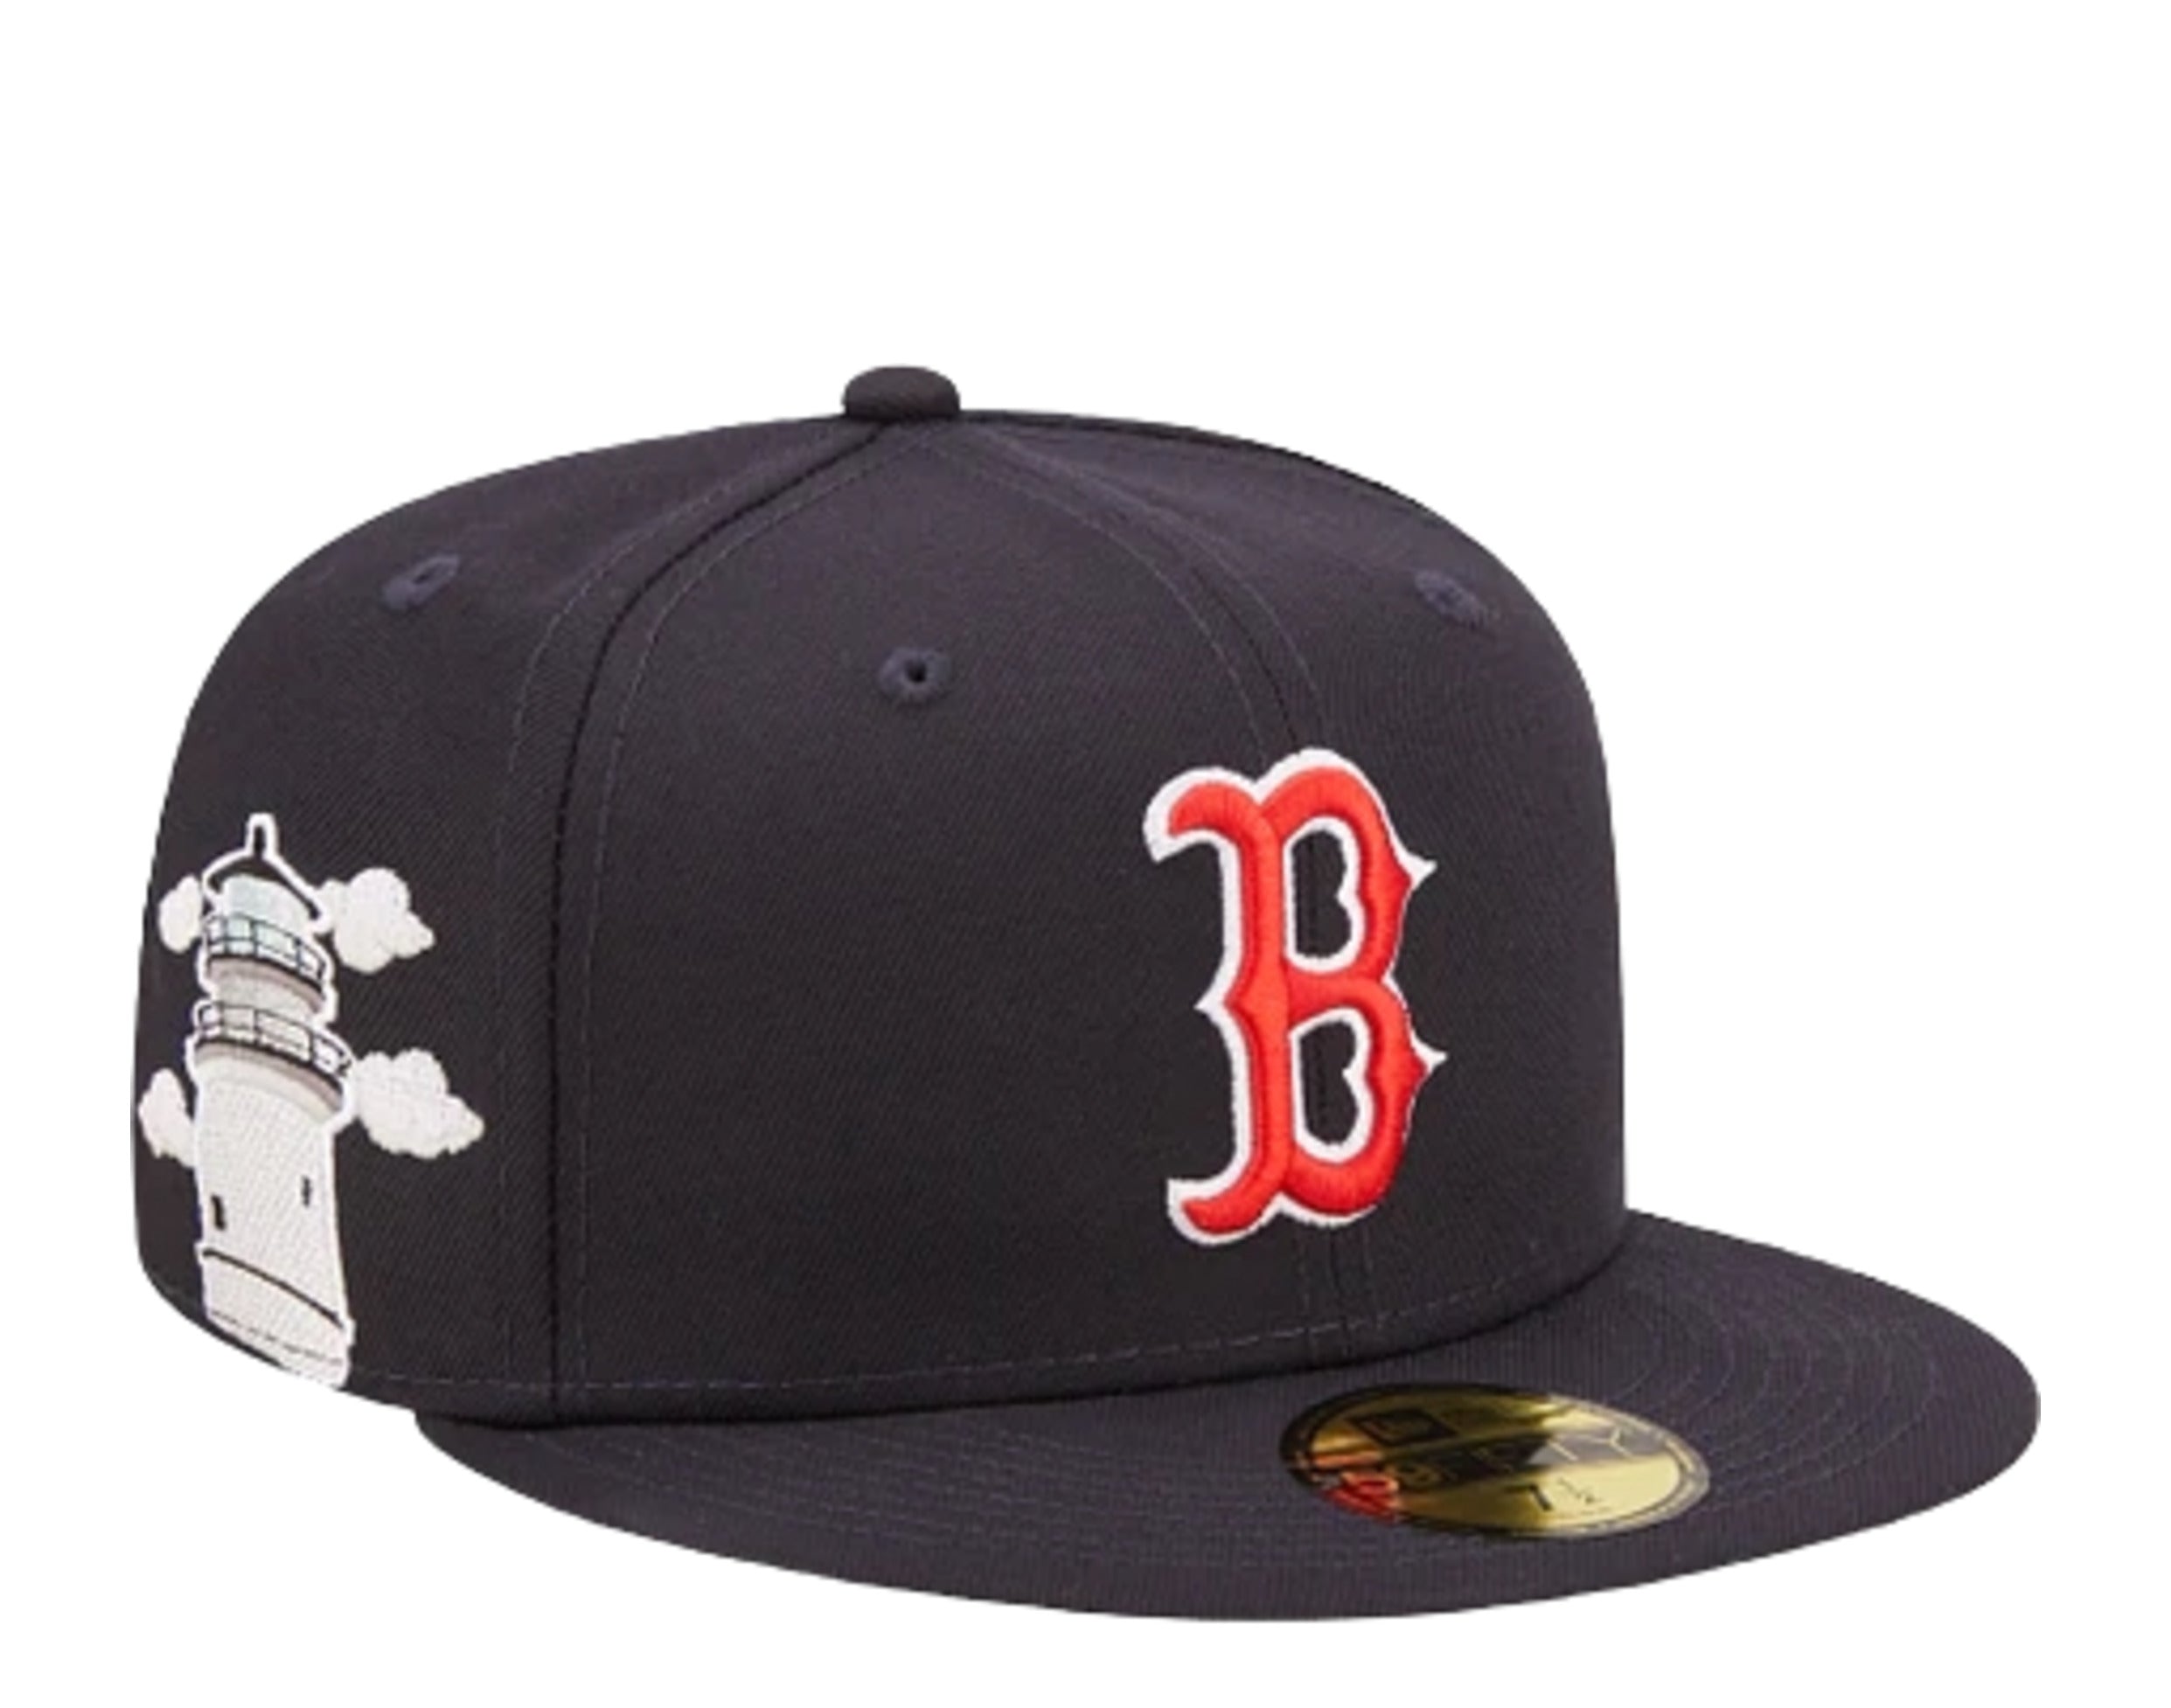 Blue New Era MLB Boston Red Sox 59Fifty Cap | JD Sports Global